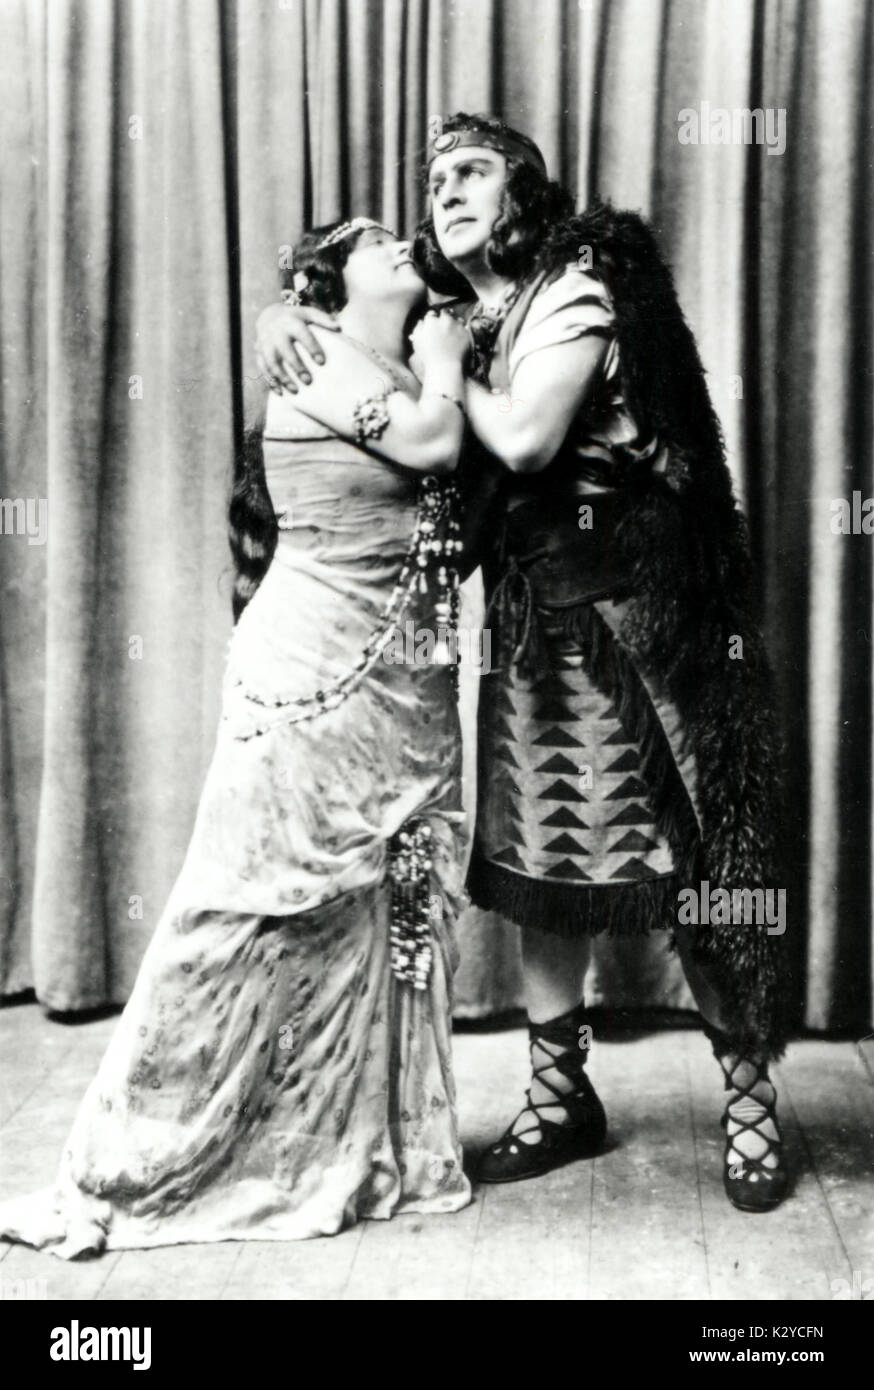 SAINT-SAENS Camille - Oper - Samson und Delila (Samson et Dalila) mit Edna Thornton (altistin, 1875-1964) als Delilah, Herr Walter Hyde (Tenor, 1875-1951) als Samson. Die Sir Thomas Beecham Opera Company. Stockfoto